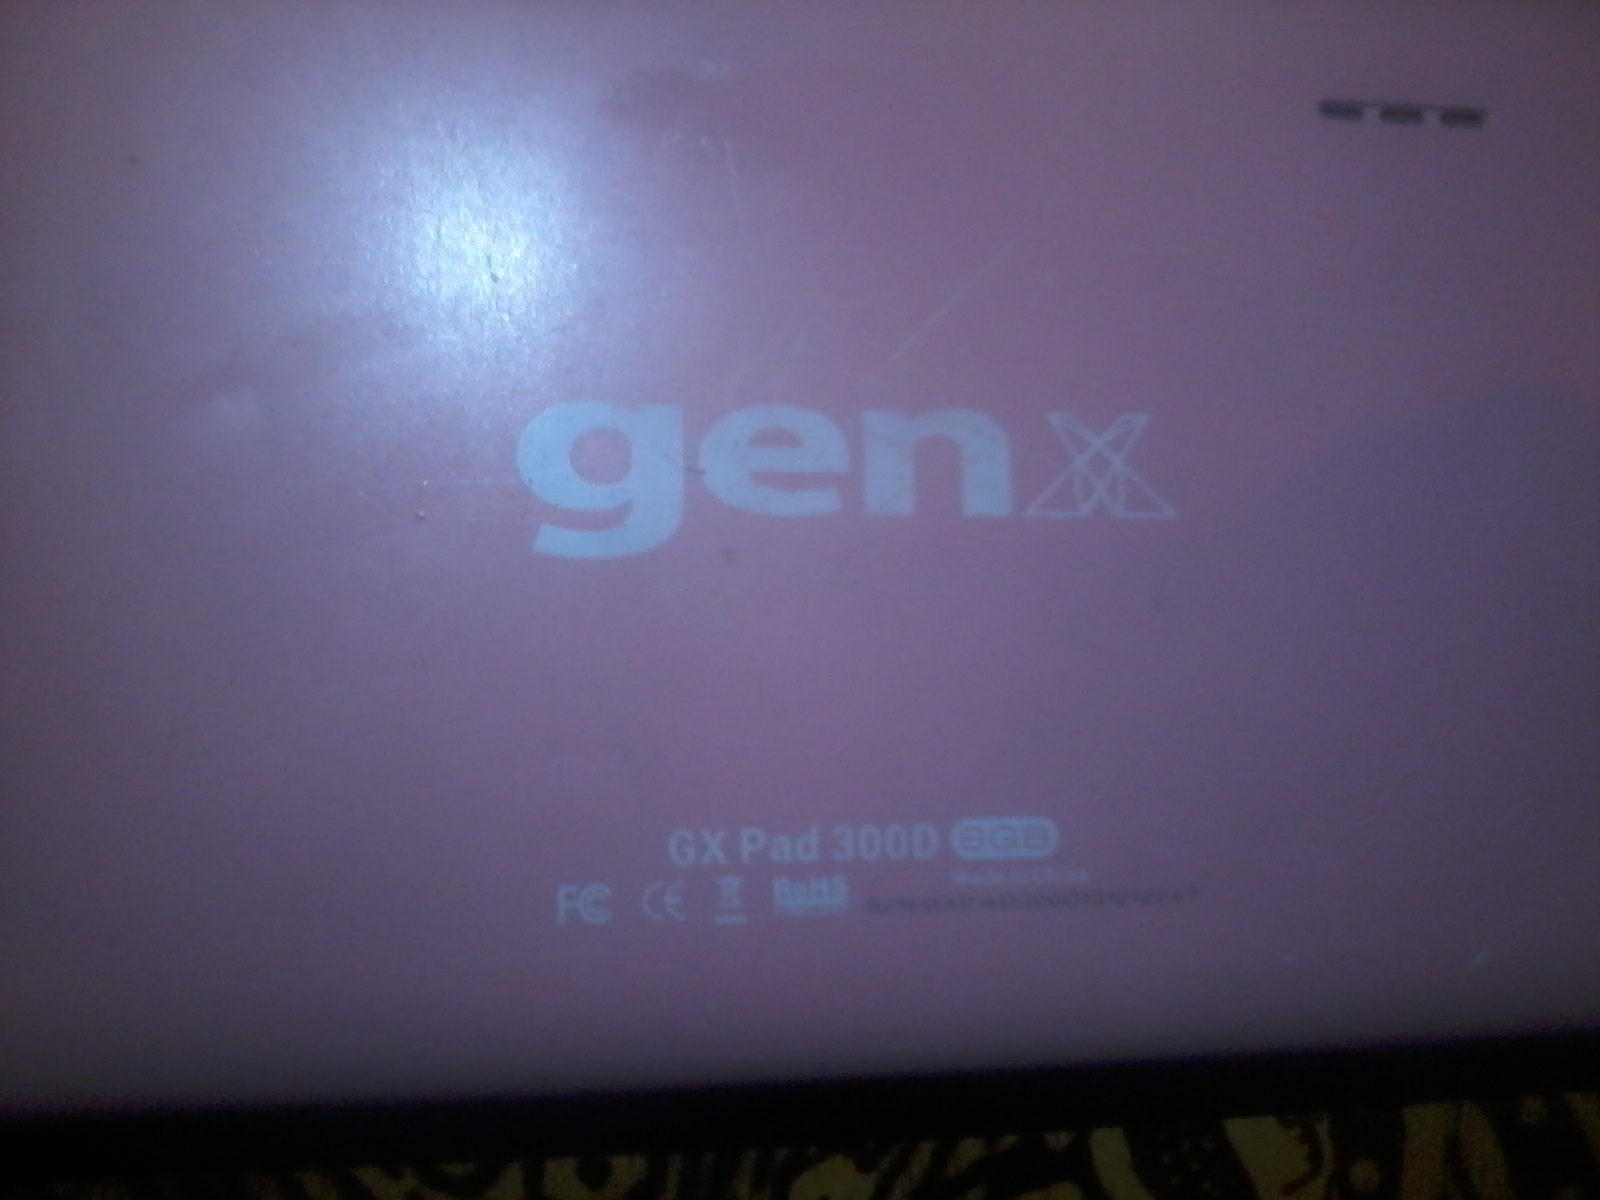 genx gx pad 300 software